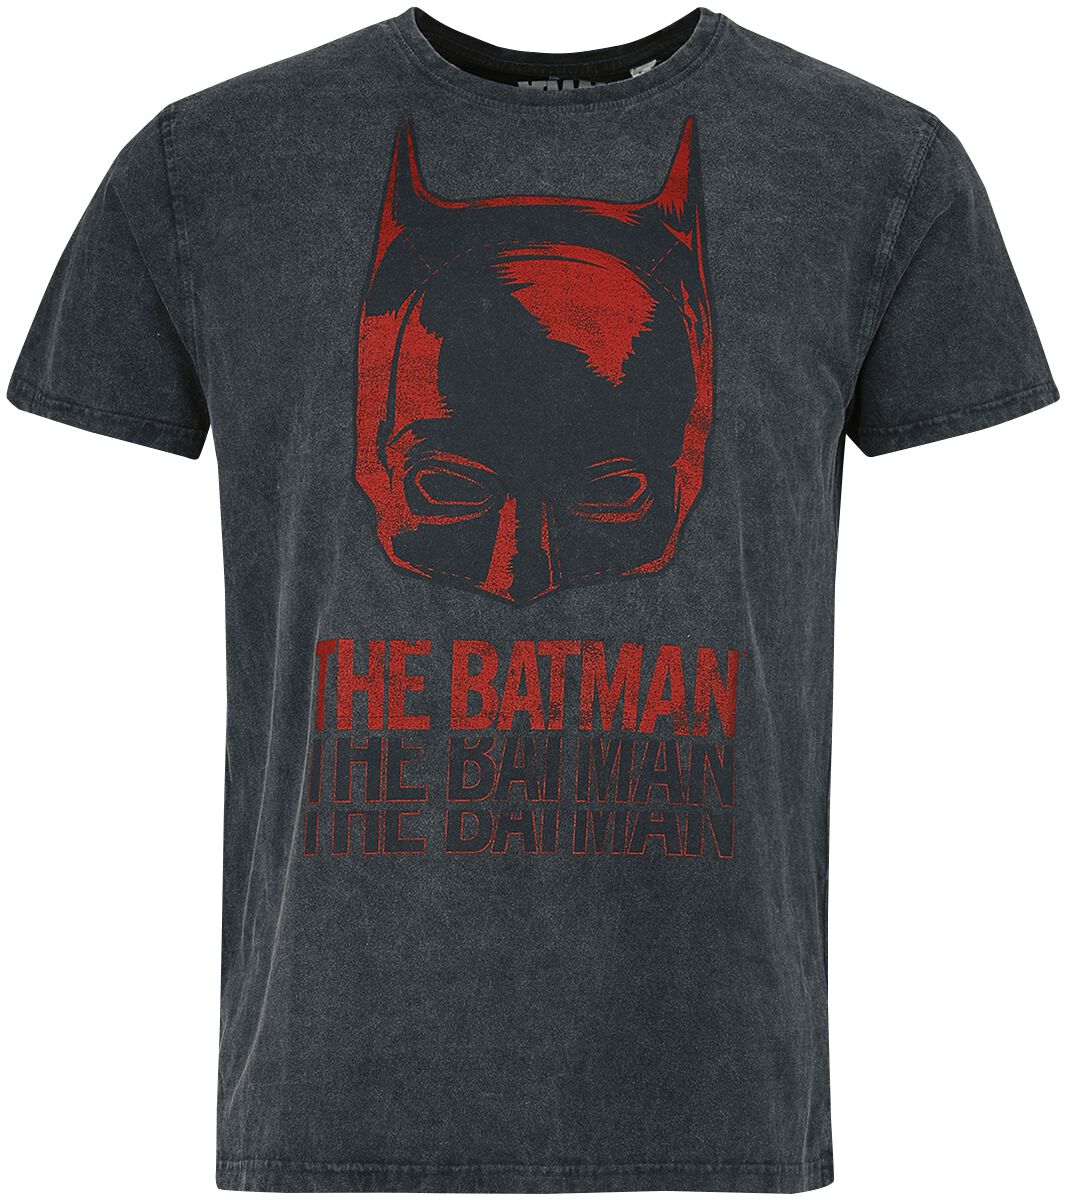 Batman - DC Comics T-Shirt - The Batman - Mask - S bis XXL - für Männer - Größe XXL - schwarz  - Lizenzierter Fanartikel